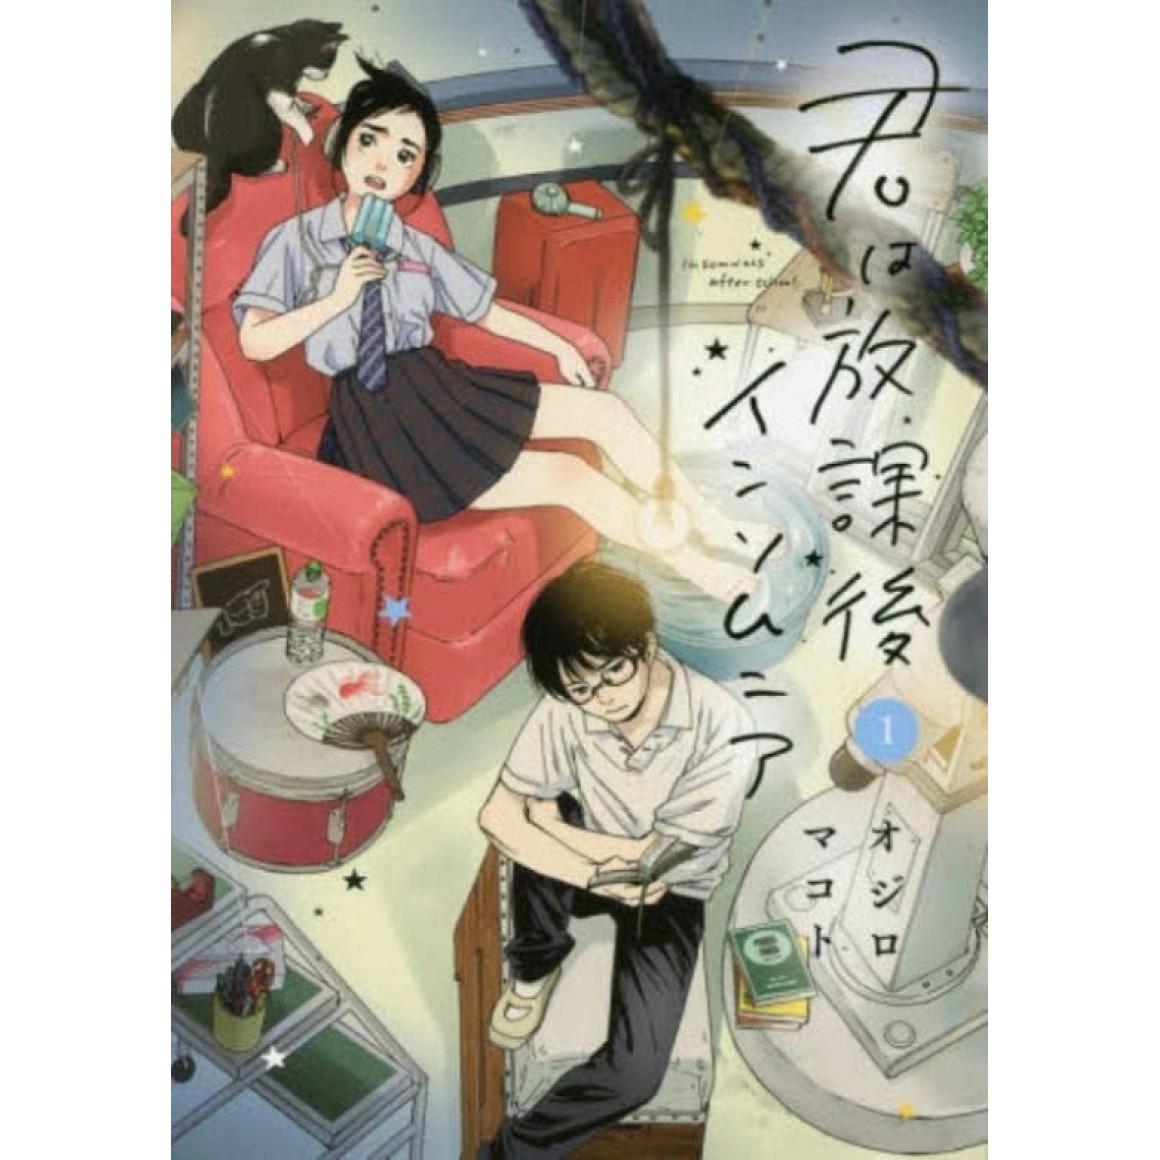 Kimi wa Houkago Insomnia” pela editora Panini - Lacradores Desintoxicados